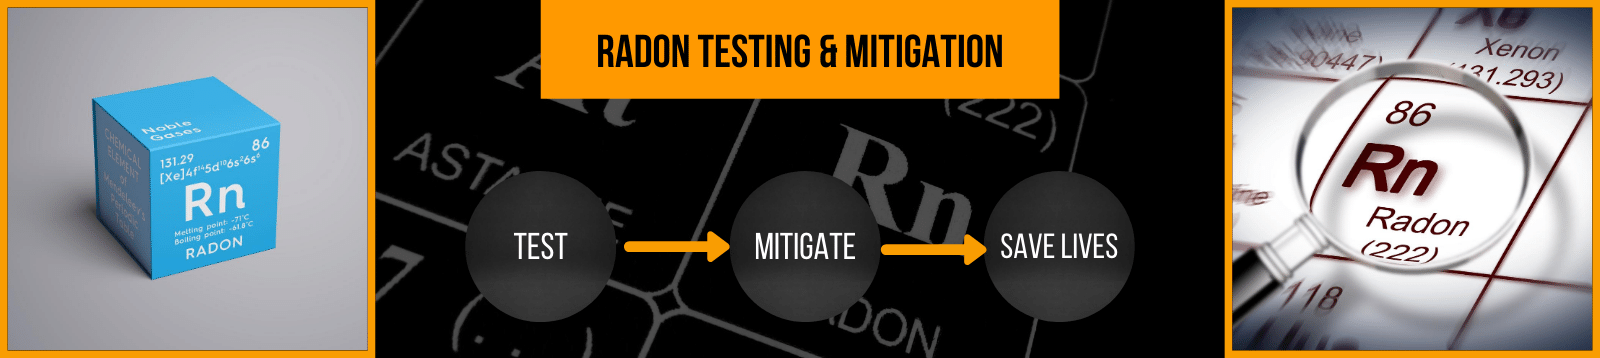 Radon testing and mitigation for Omaha, NE and Western Iowa